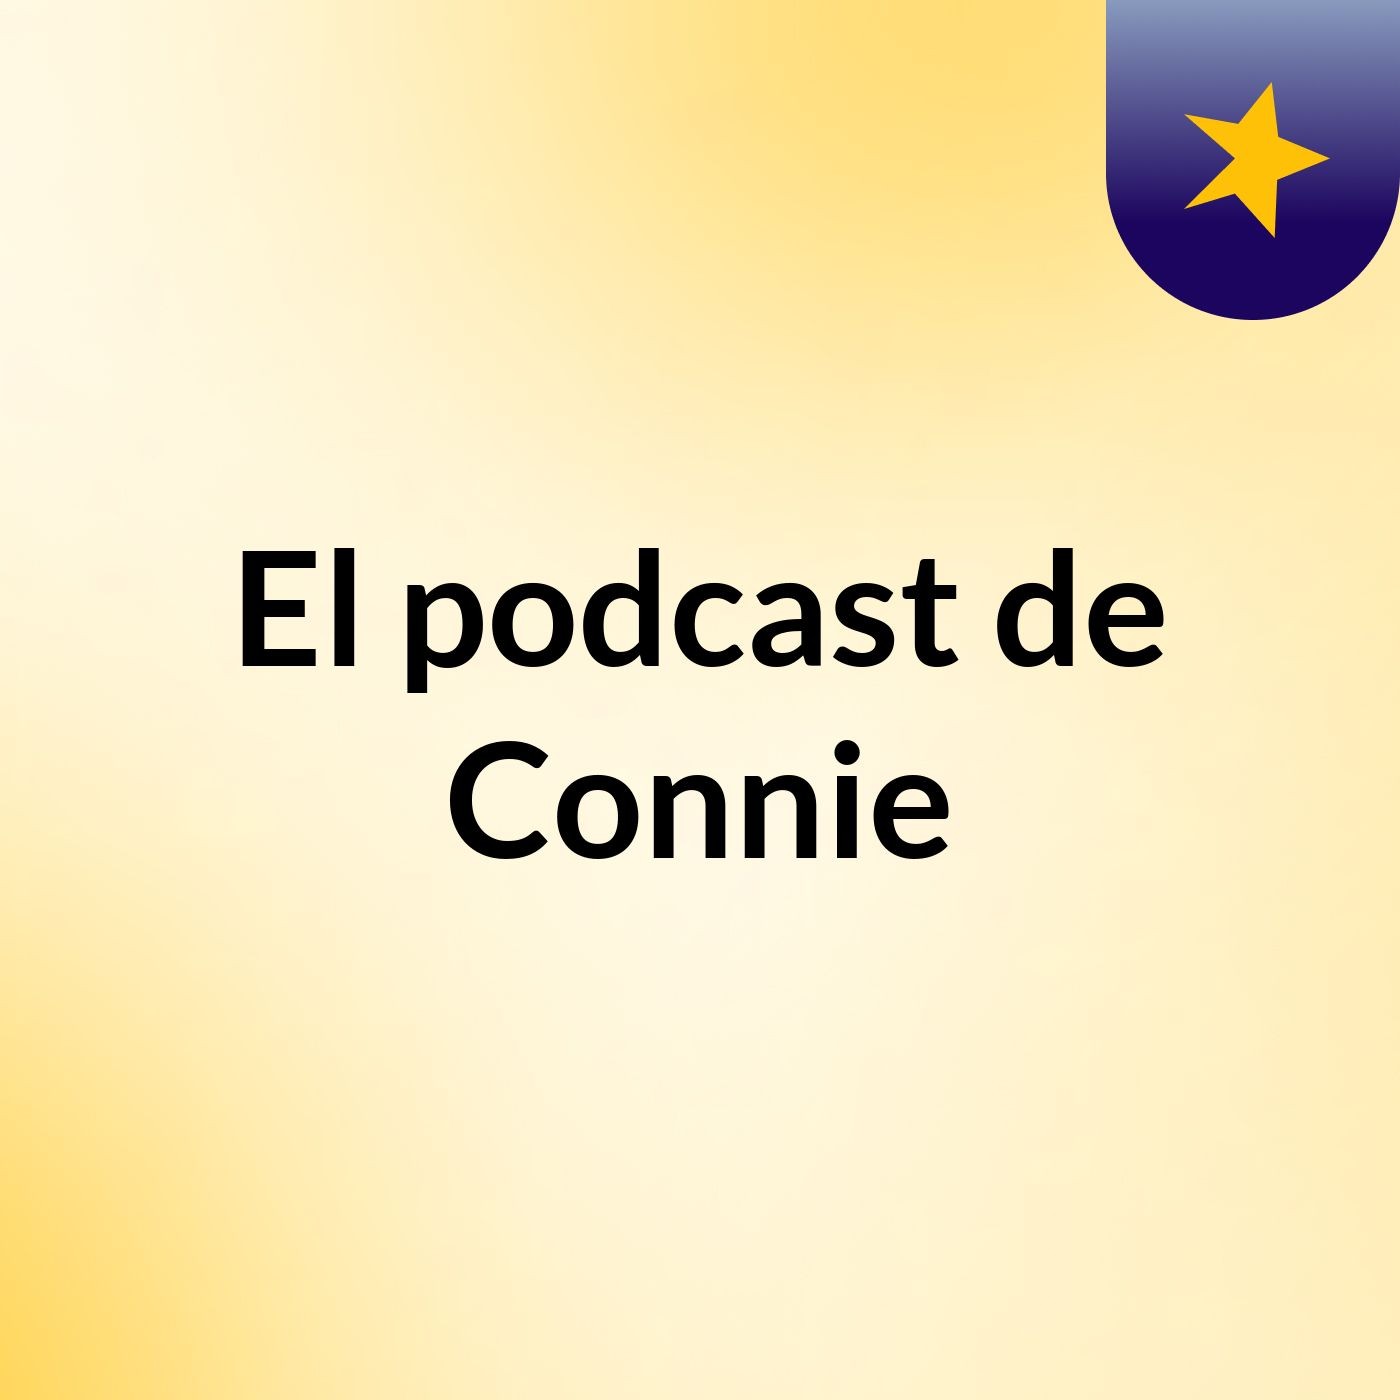 El podcast de Connie